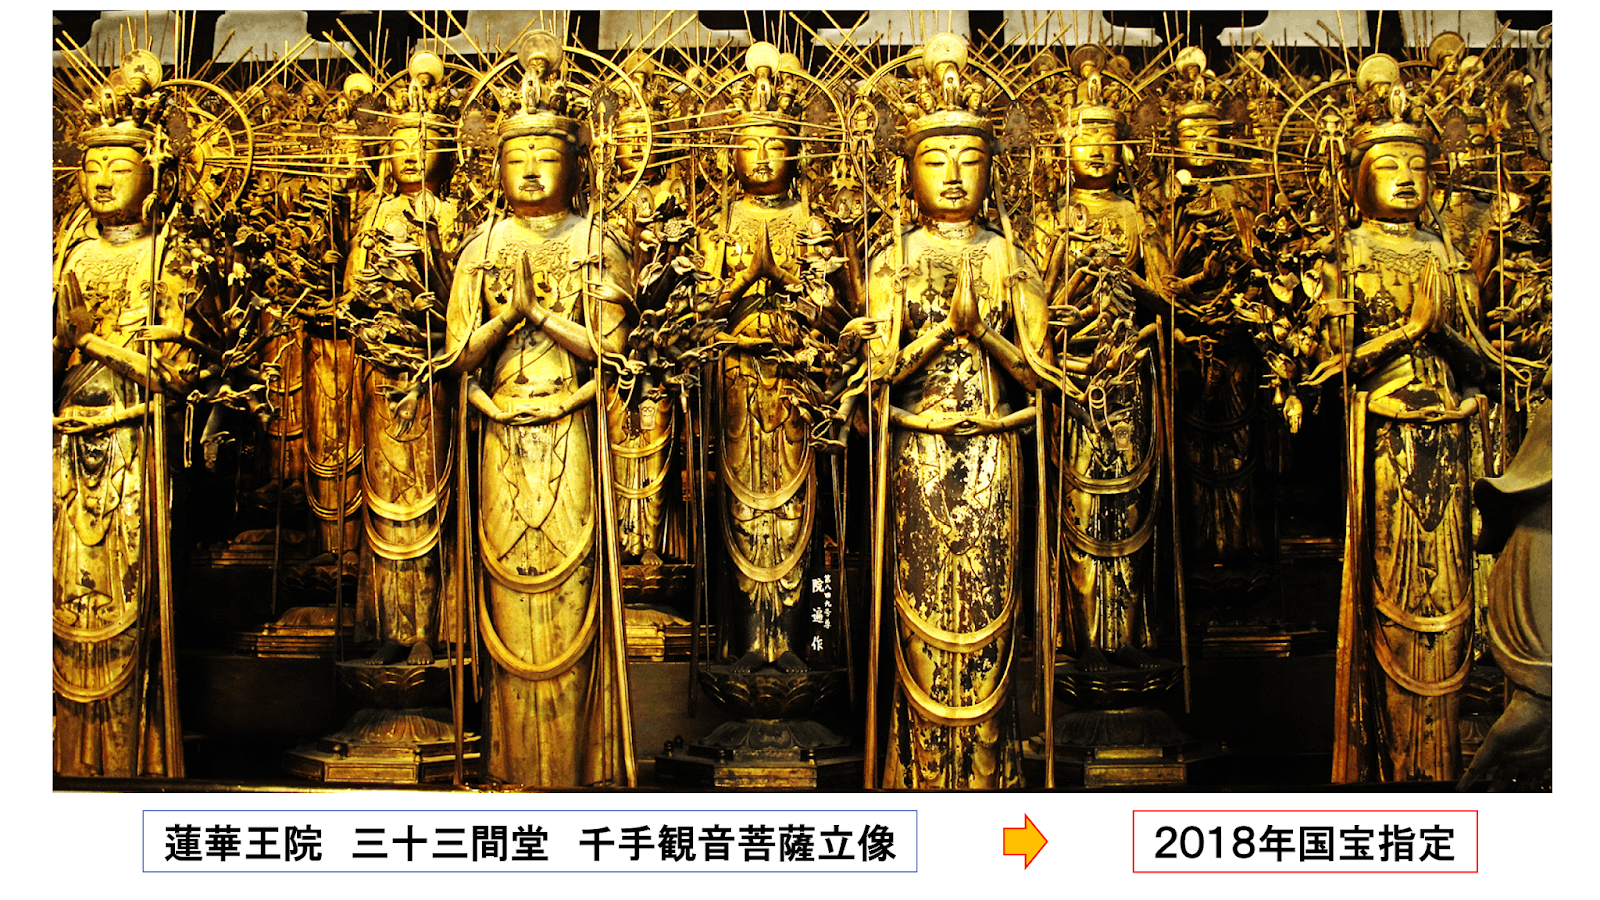 仏像愛好倶楽部 ｂａｃ 18年 国宝指定は 三十三間堂と興福寺の仏像